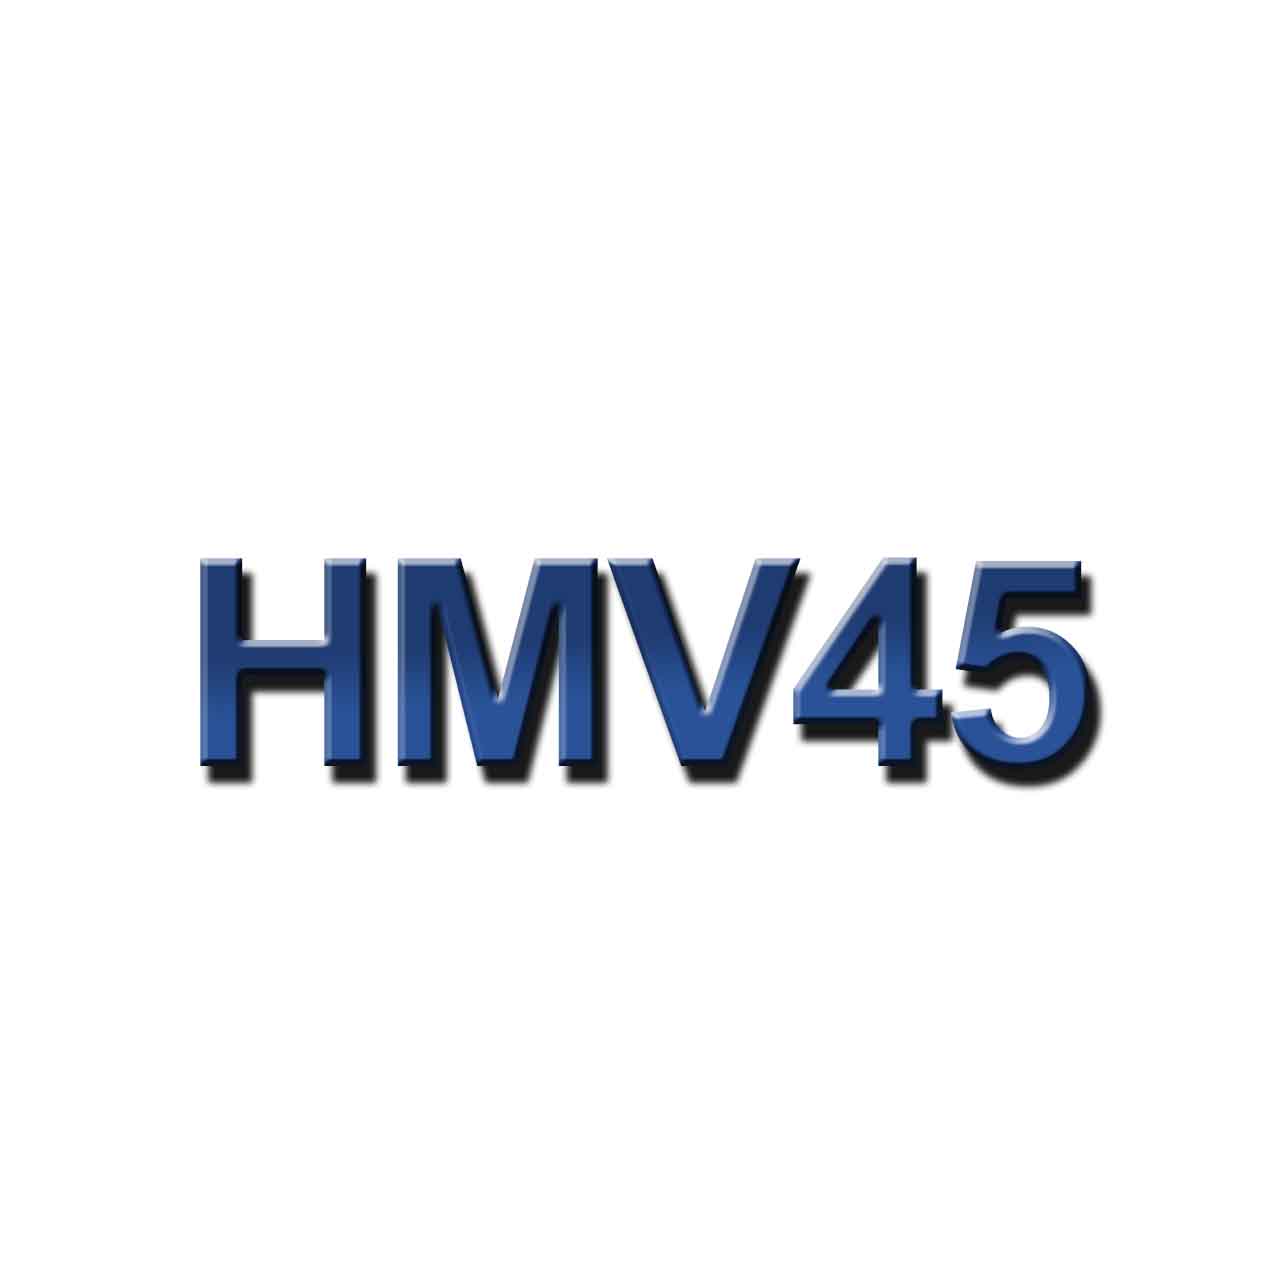 HMV45